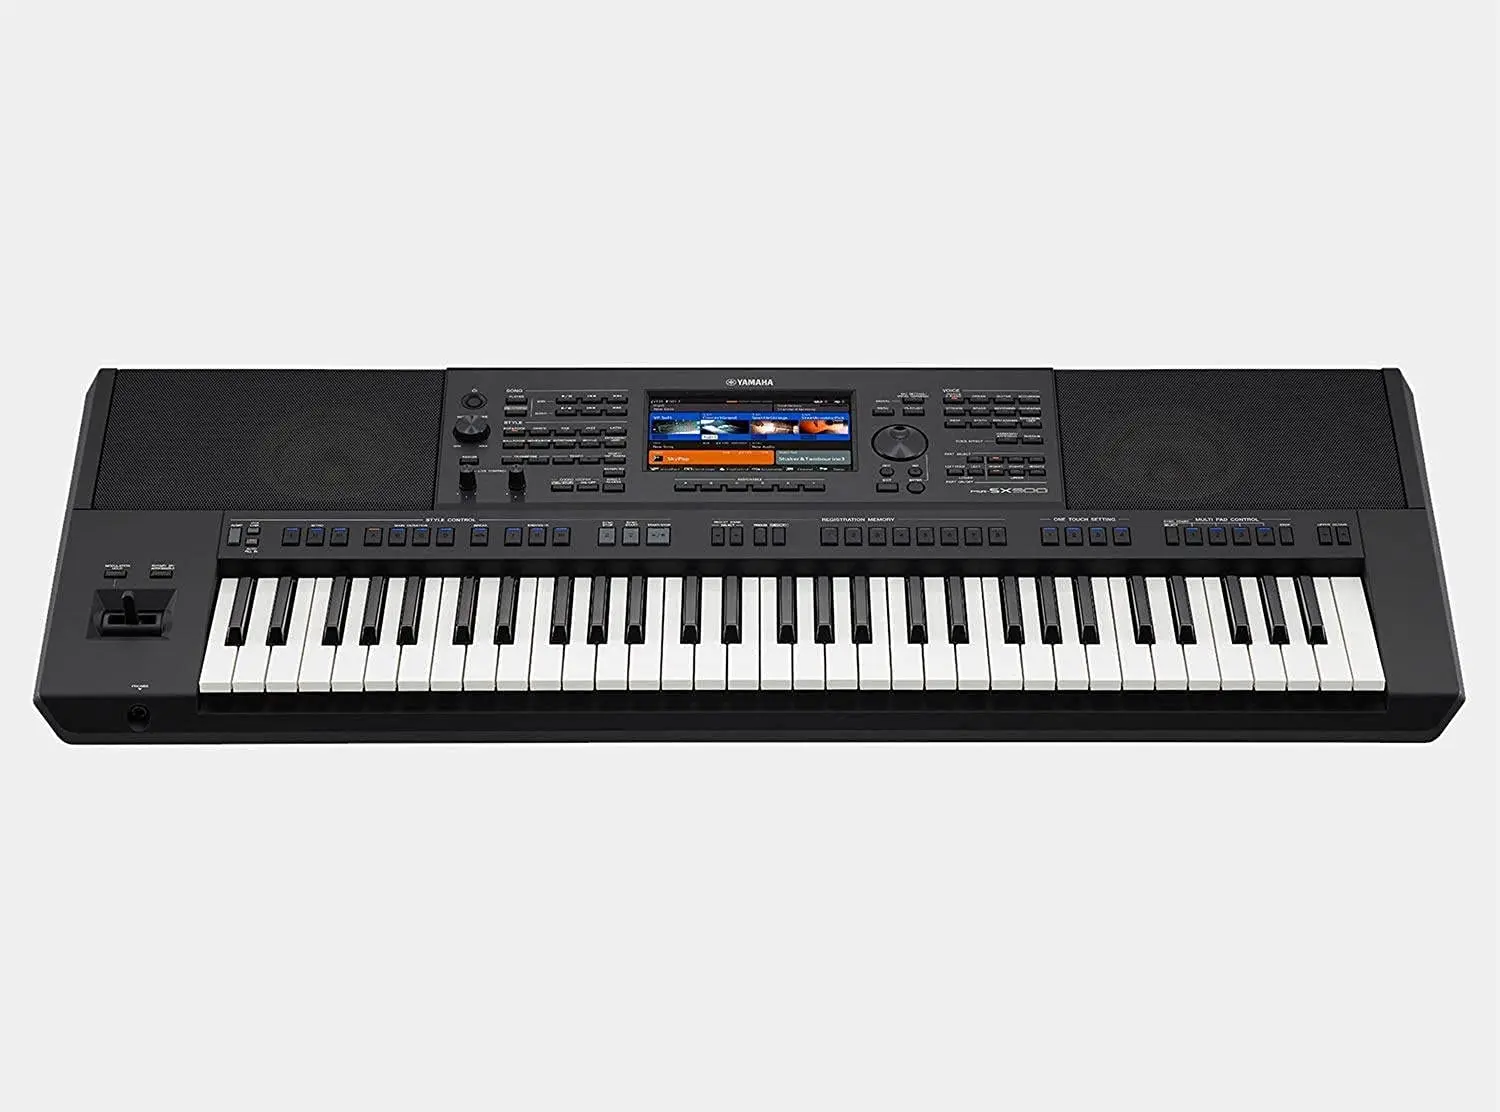 (НОВЫЙ бренд) Набор клавиатур PSR SX900 S975 SX700 S970 Deluxe keyboards4